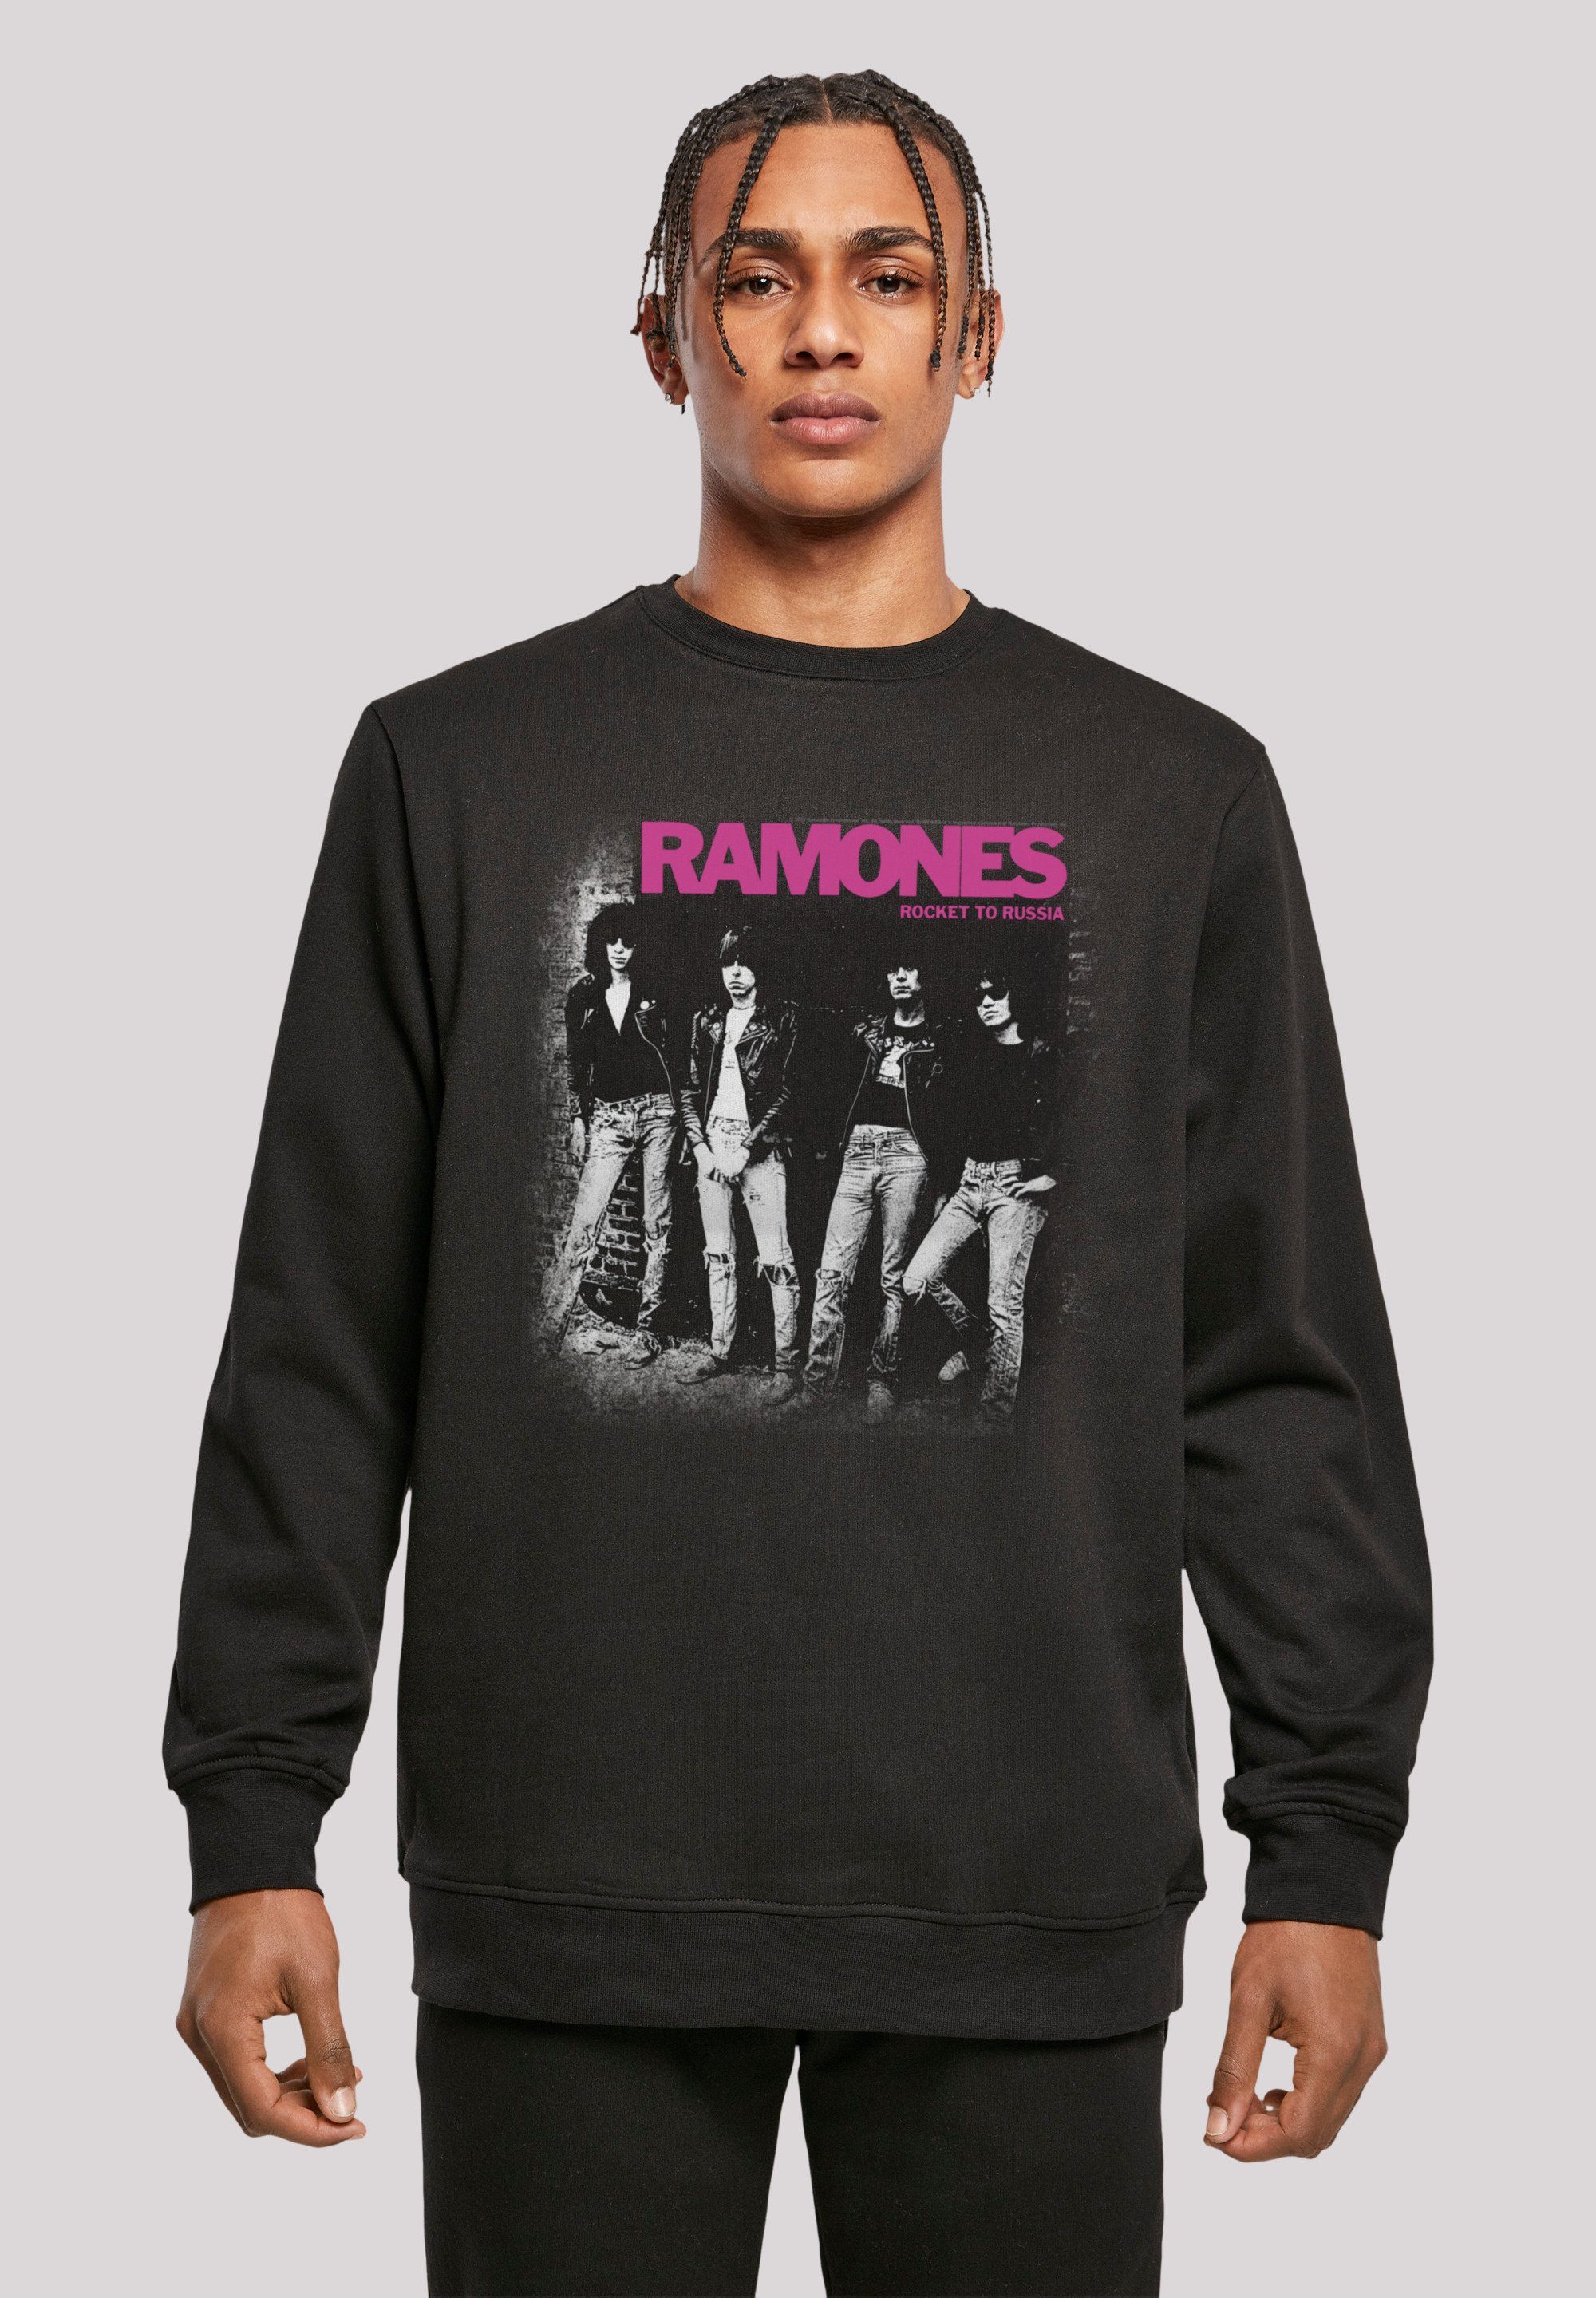 F4NT4STIC Sweatshirt Ramones Rock Musik Band Rocket To Russia Faded Premium Qualität, Band, Rock-Musik